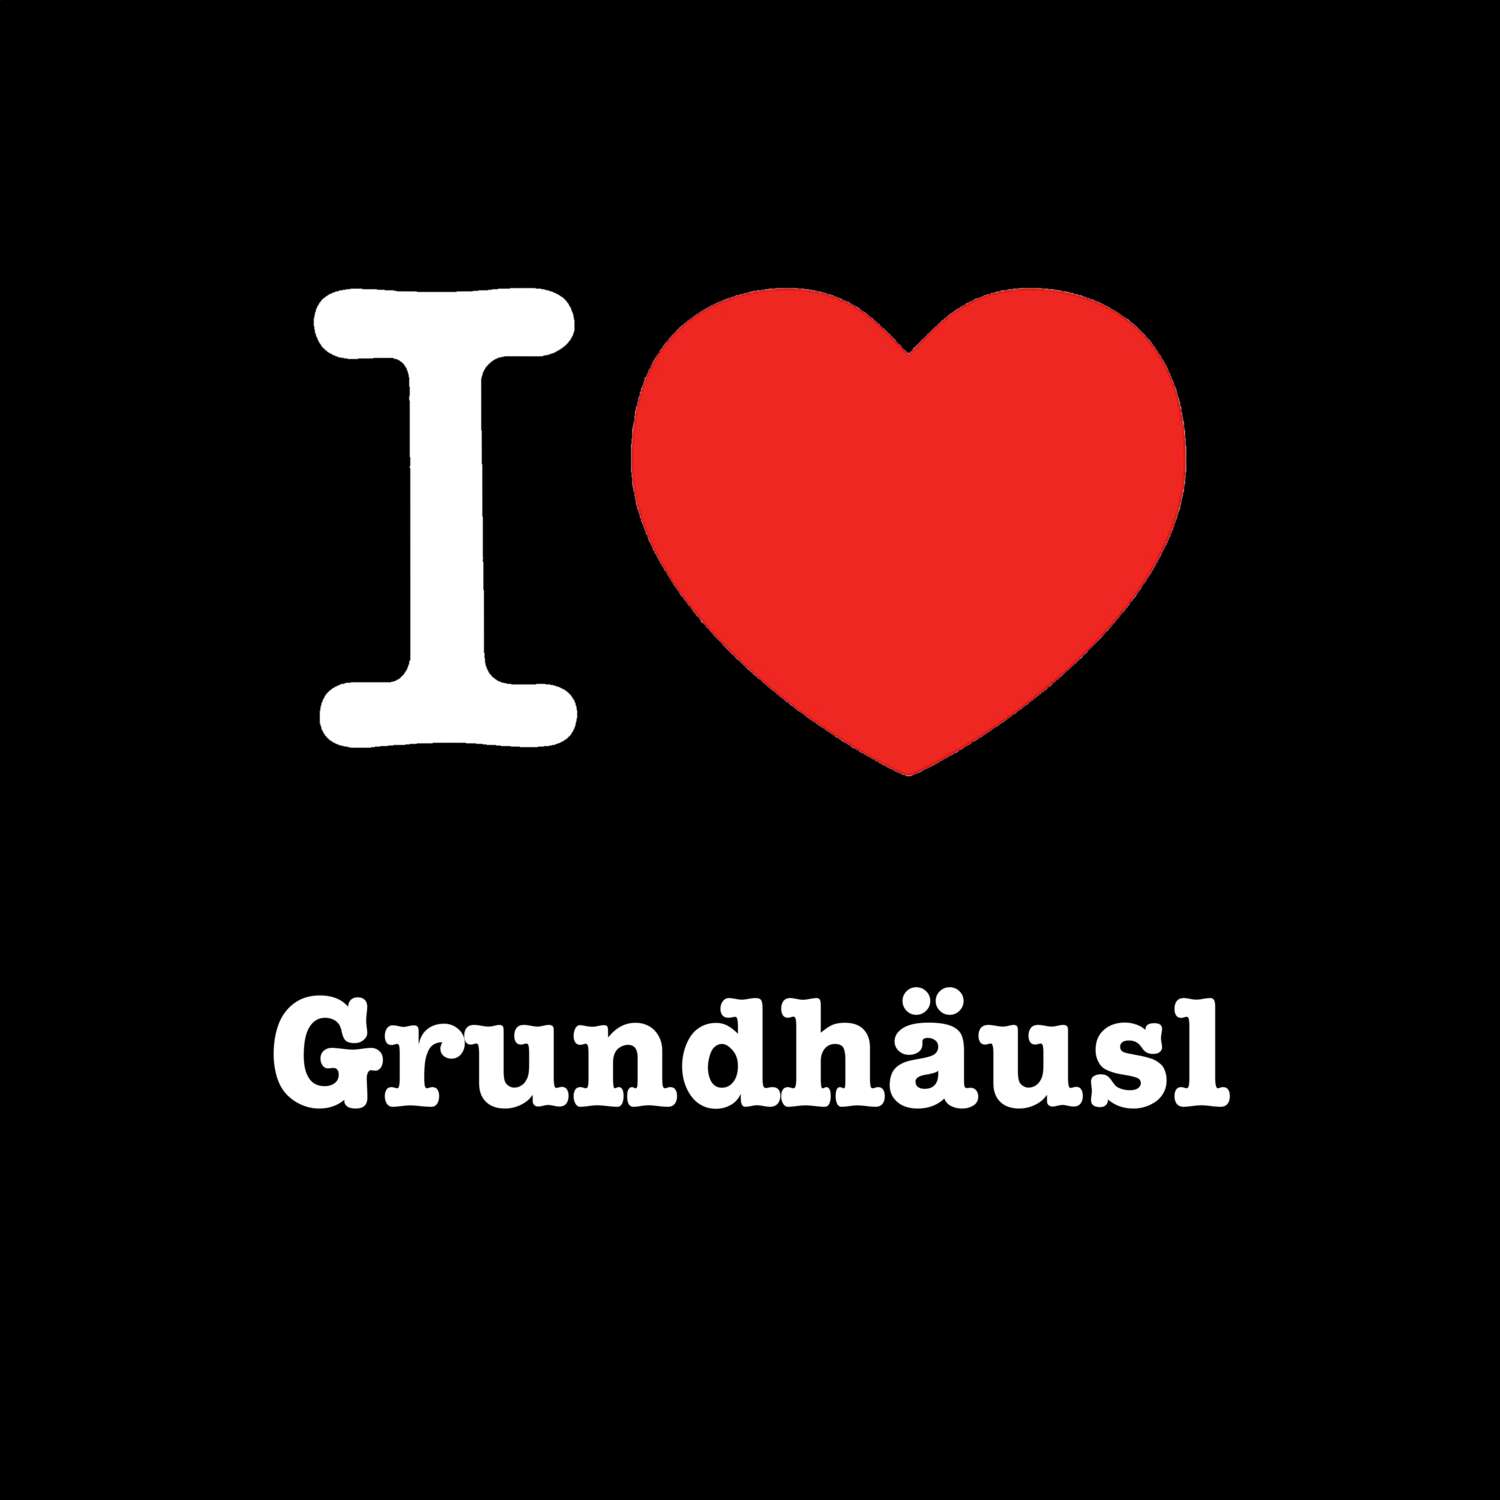 Grundhäusl T-Shirt »I love«